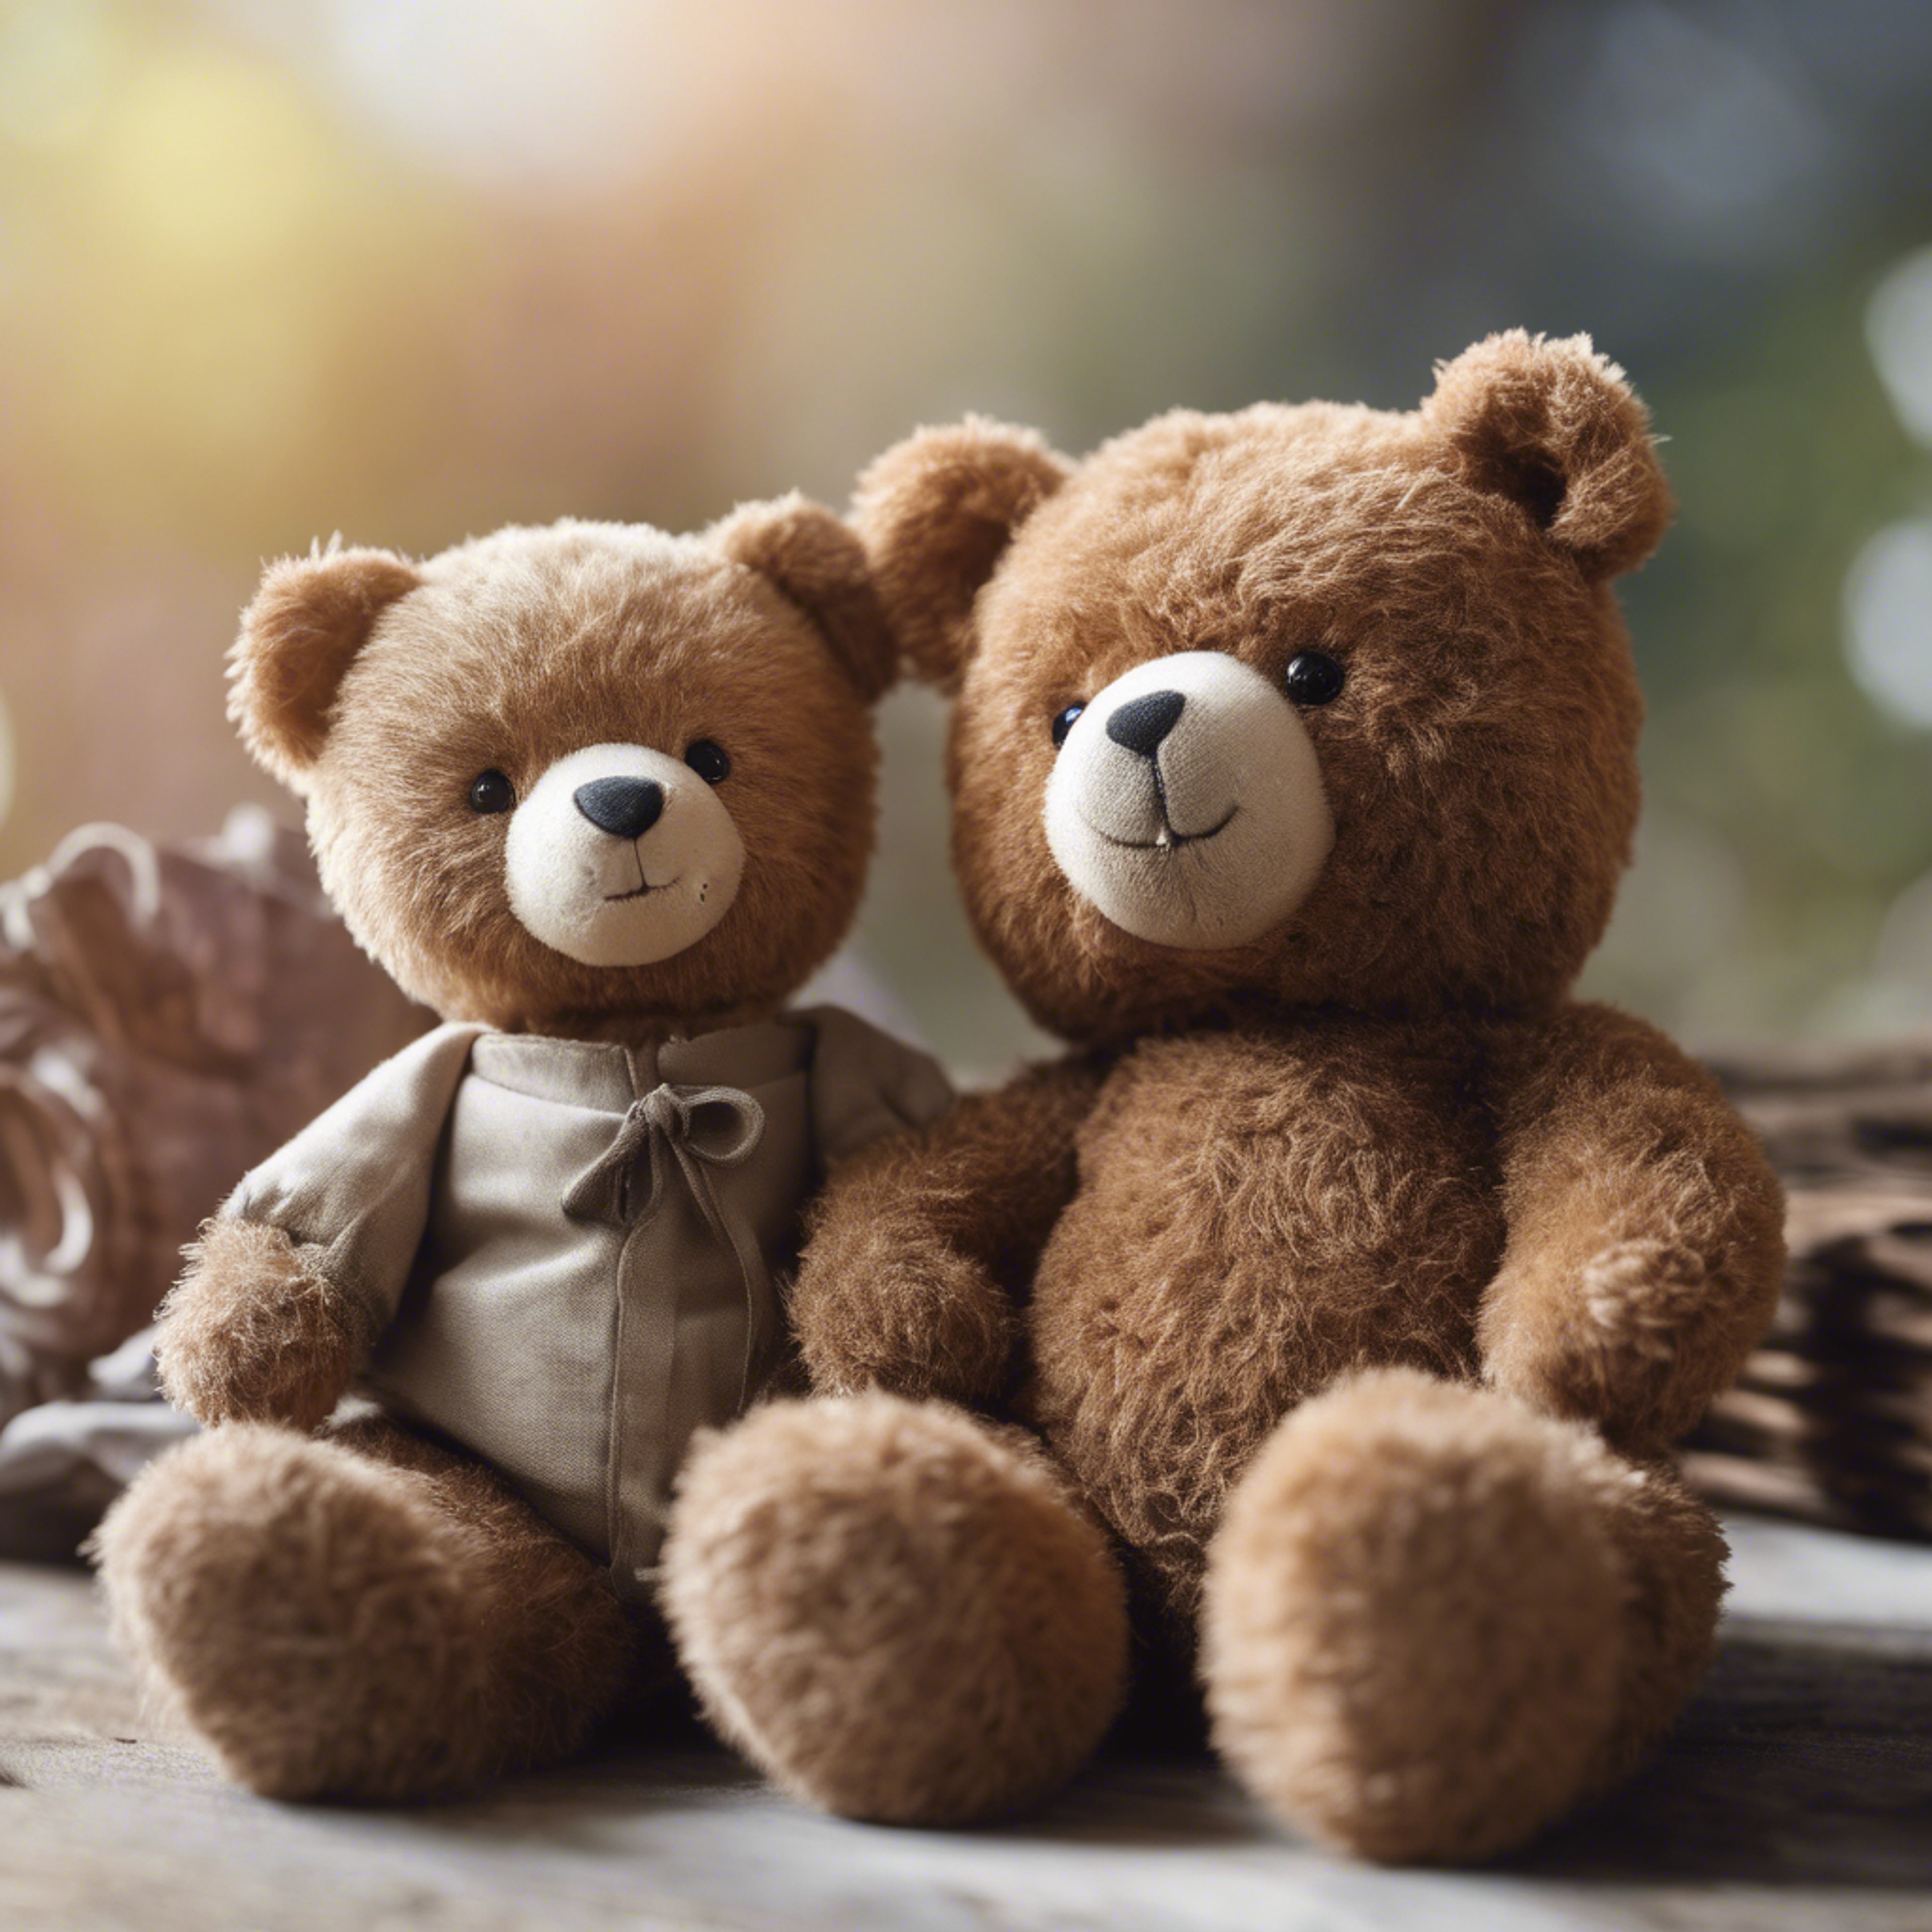 A teddy bear and a real bear cub sitting side by side comparing sizes. Kertas dinding[ecf7dbb664a44b6083b1]